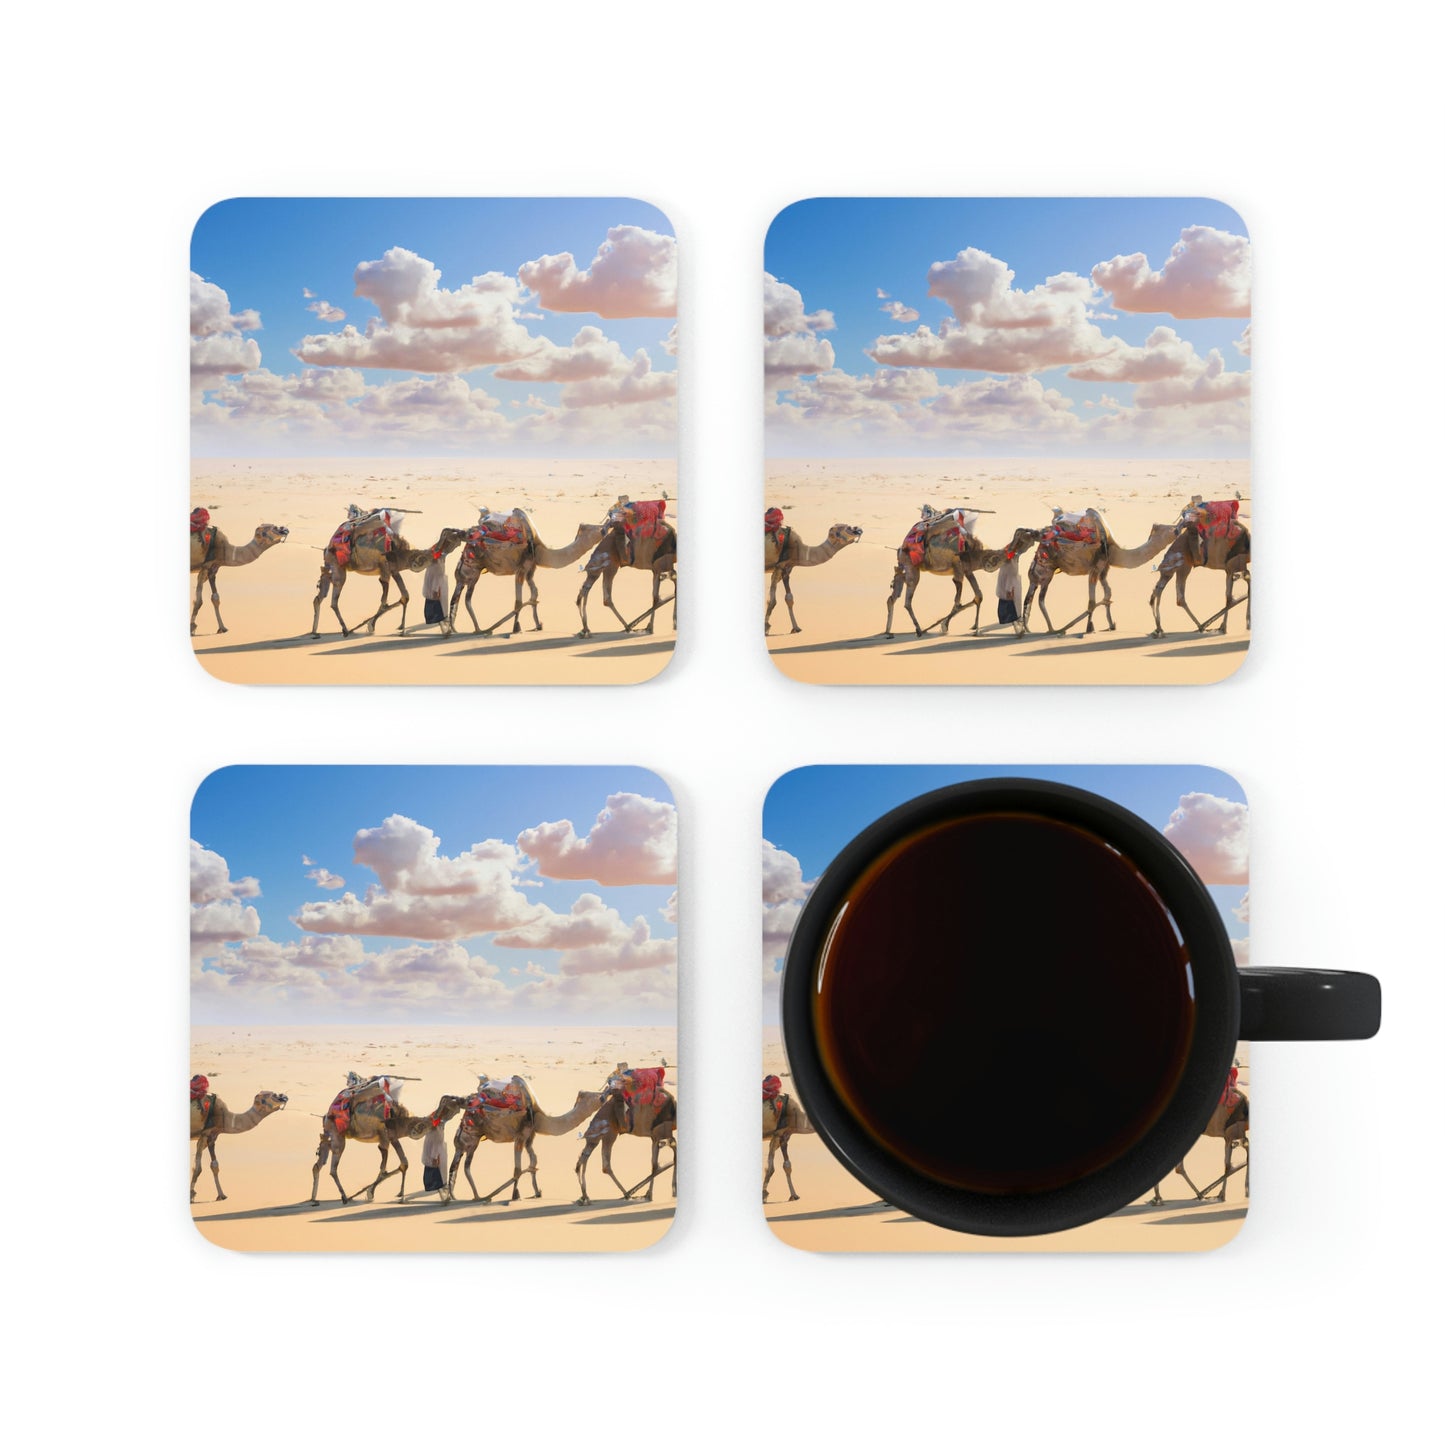 Corkwood Coaster Set - Camel Caravan